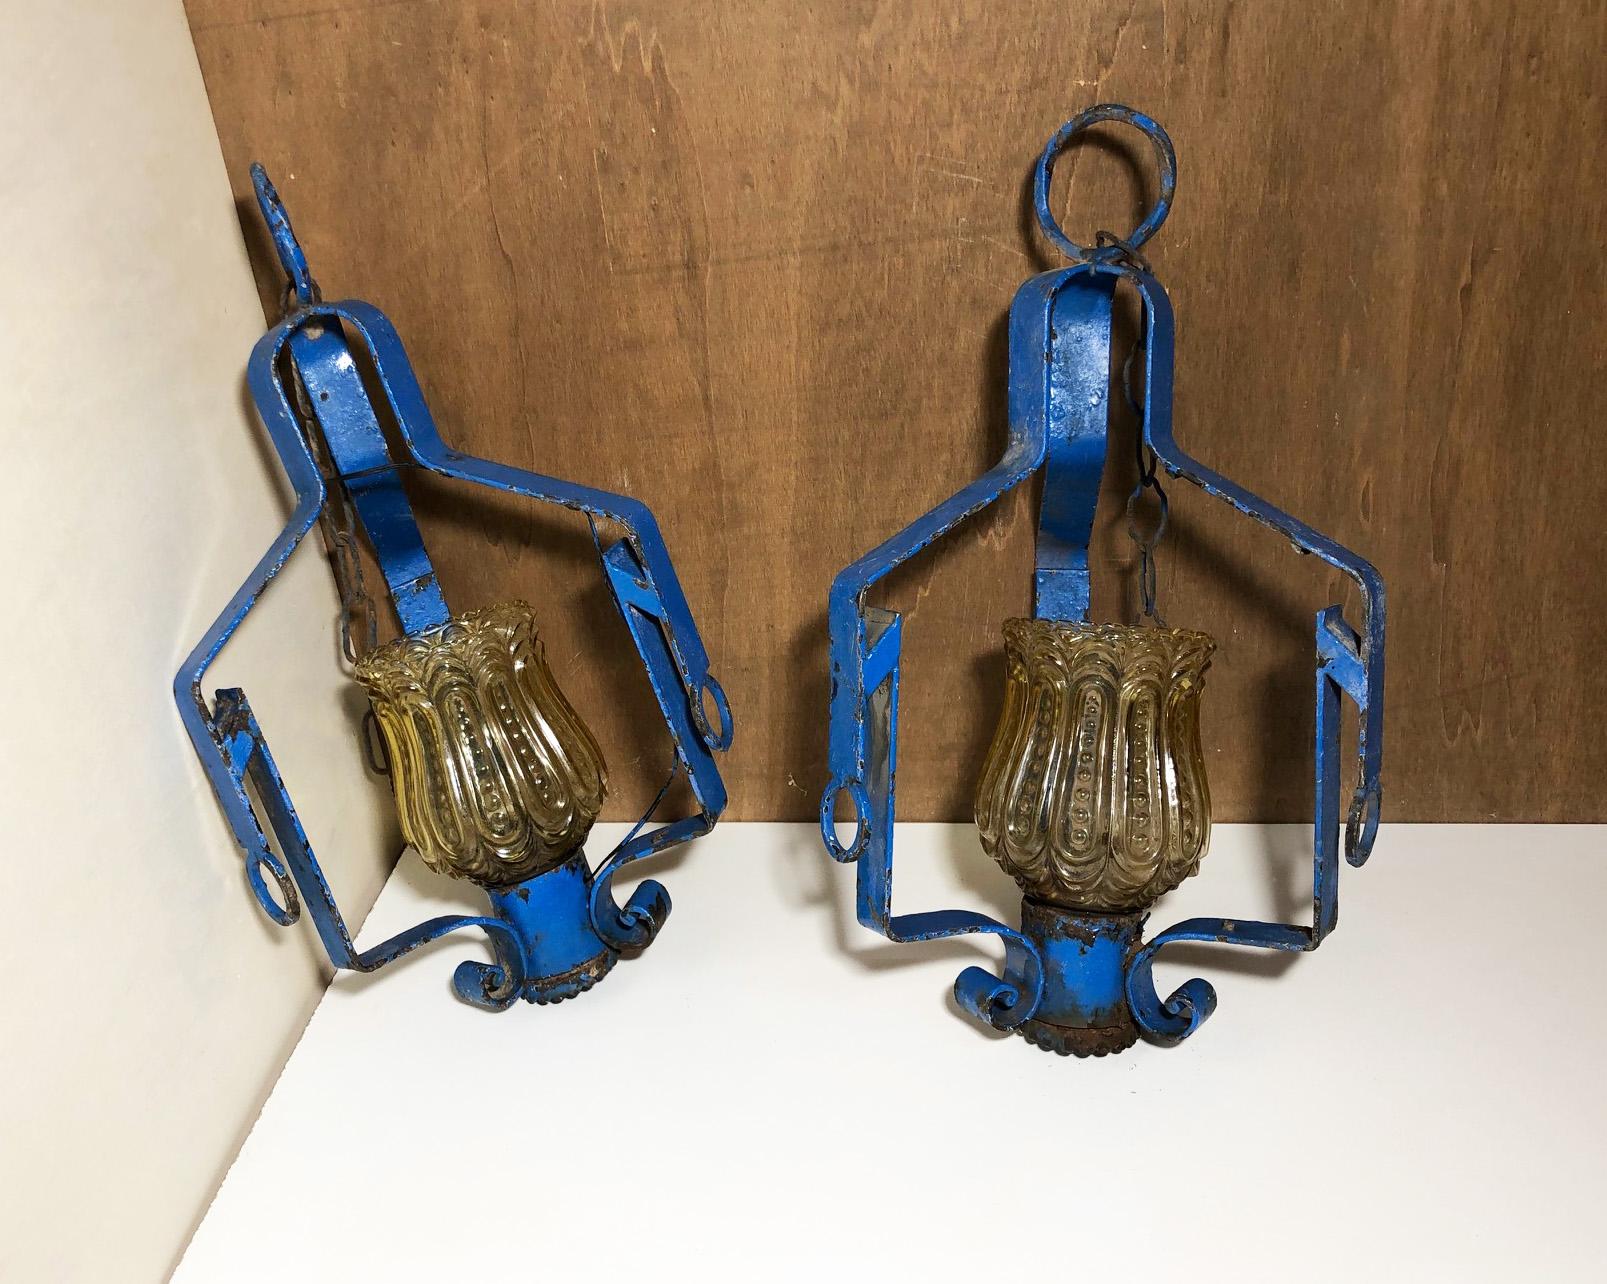 Pair of original 1970s Italian blue lanterns
Original yellow glass